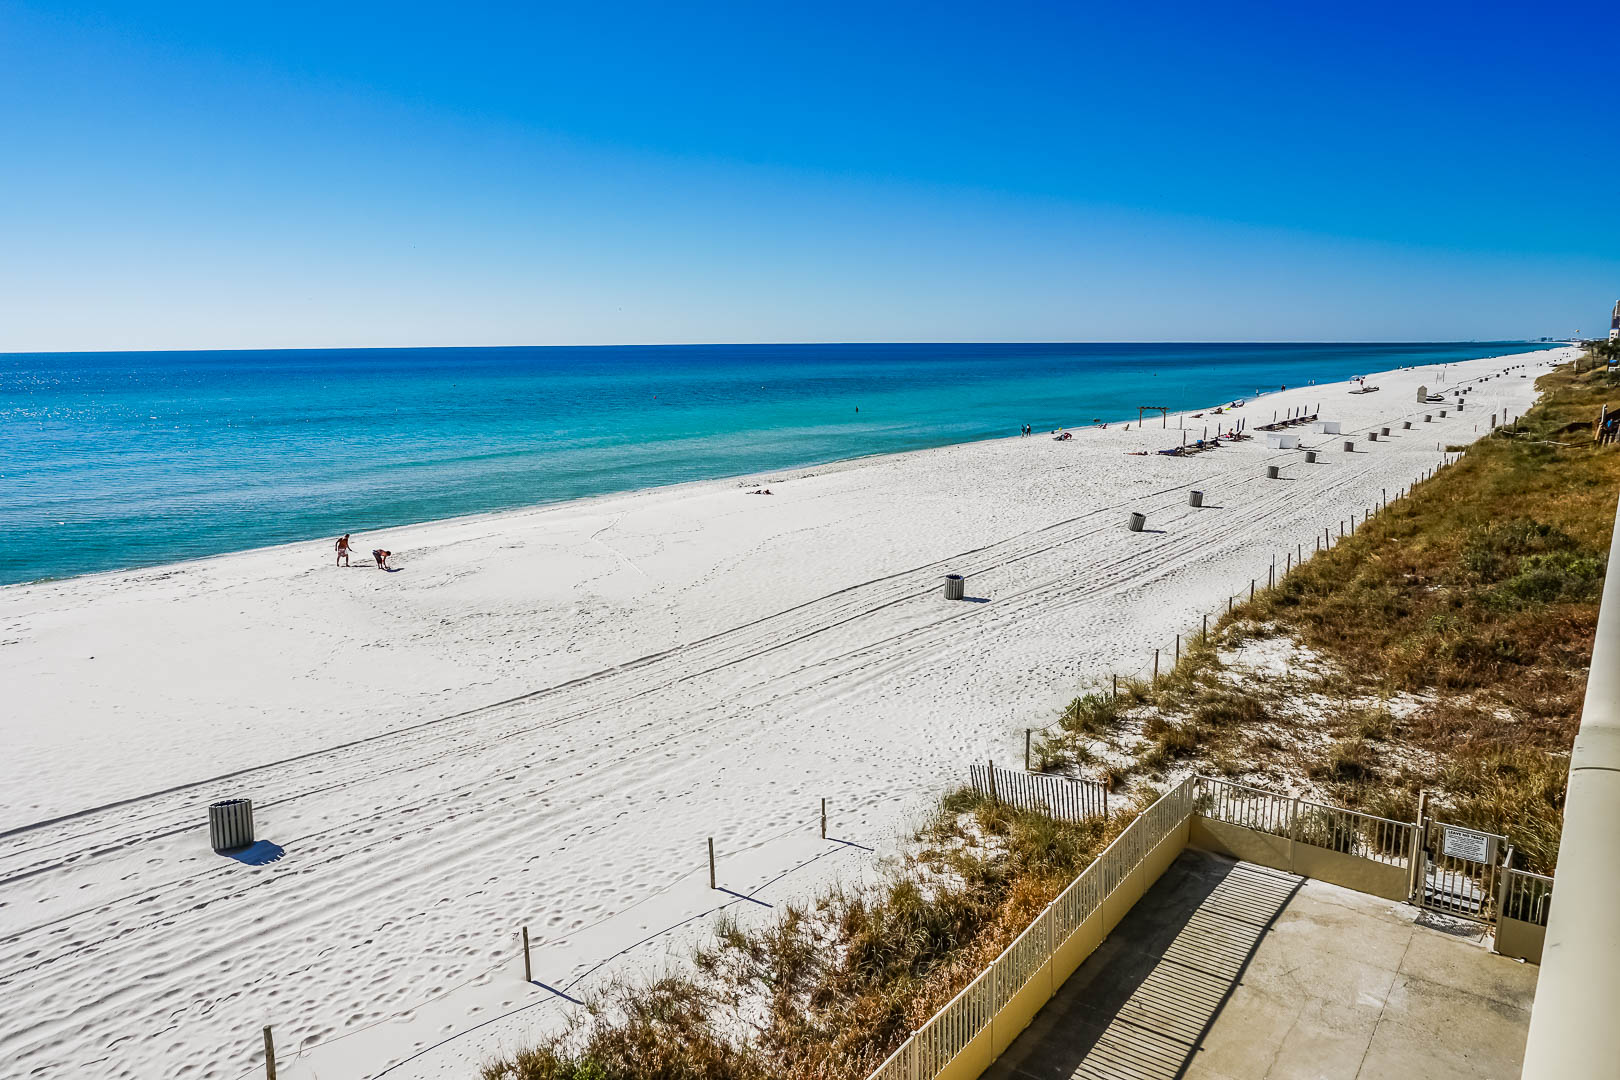 A relaxing ocean view from VRI's Panama City Resort & Club in Florida.